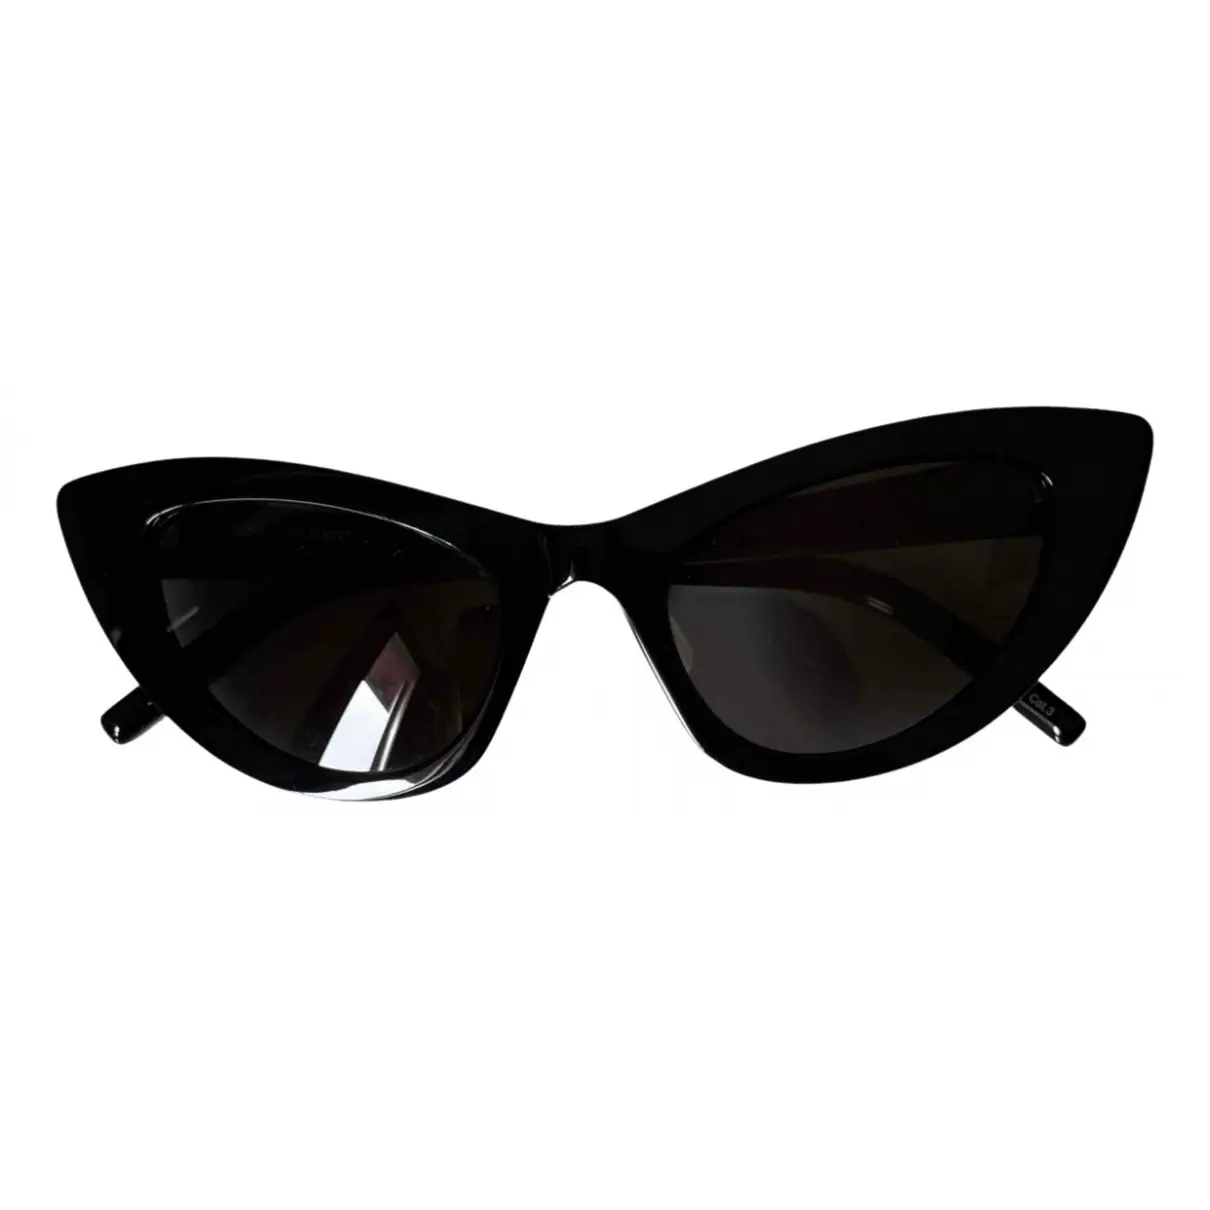 Lily sunglasses Saint Laurent